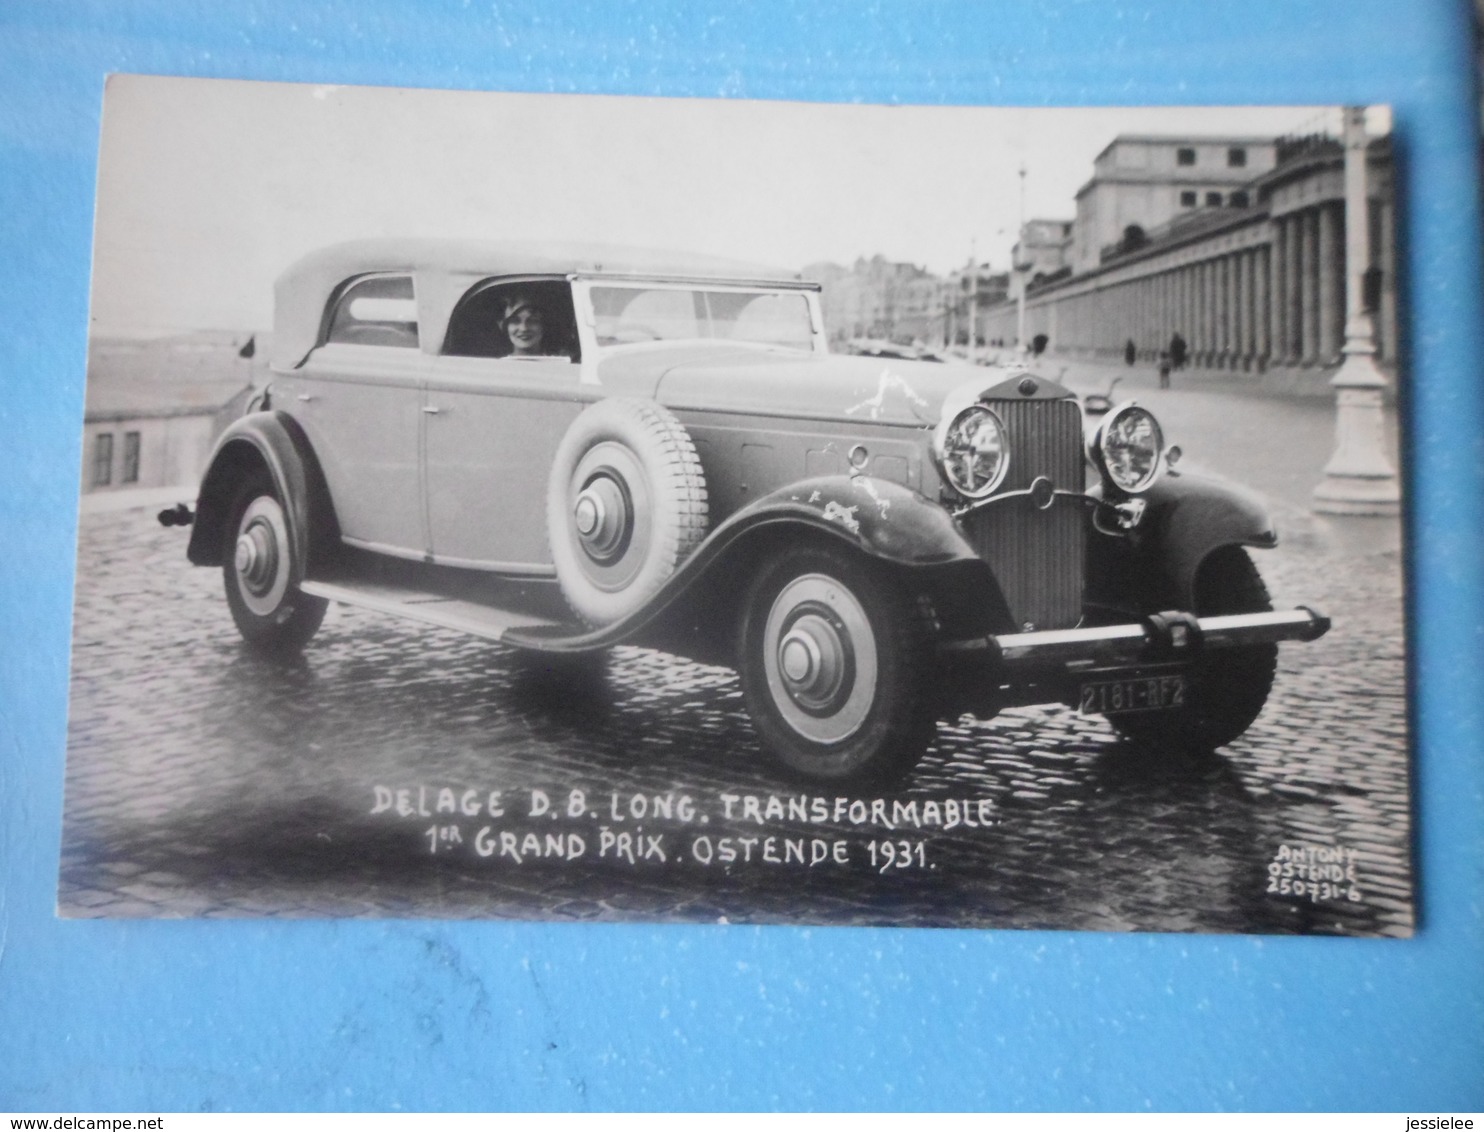 CPA PHOTO AUTOMOBILE DELAGE D 8 LONG TRANSFORMABLE - 1ER GRAND PRIX - OSTENDE 1931 - Turismo